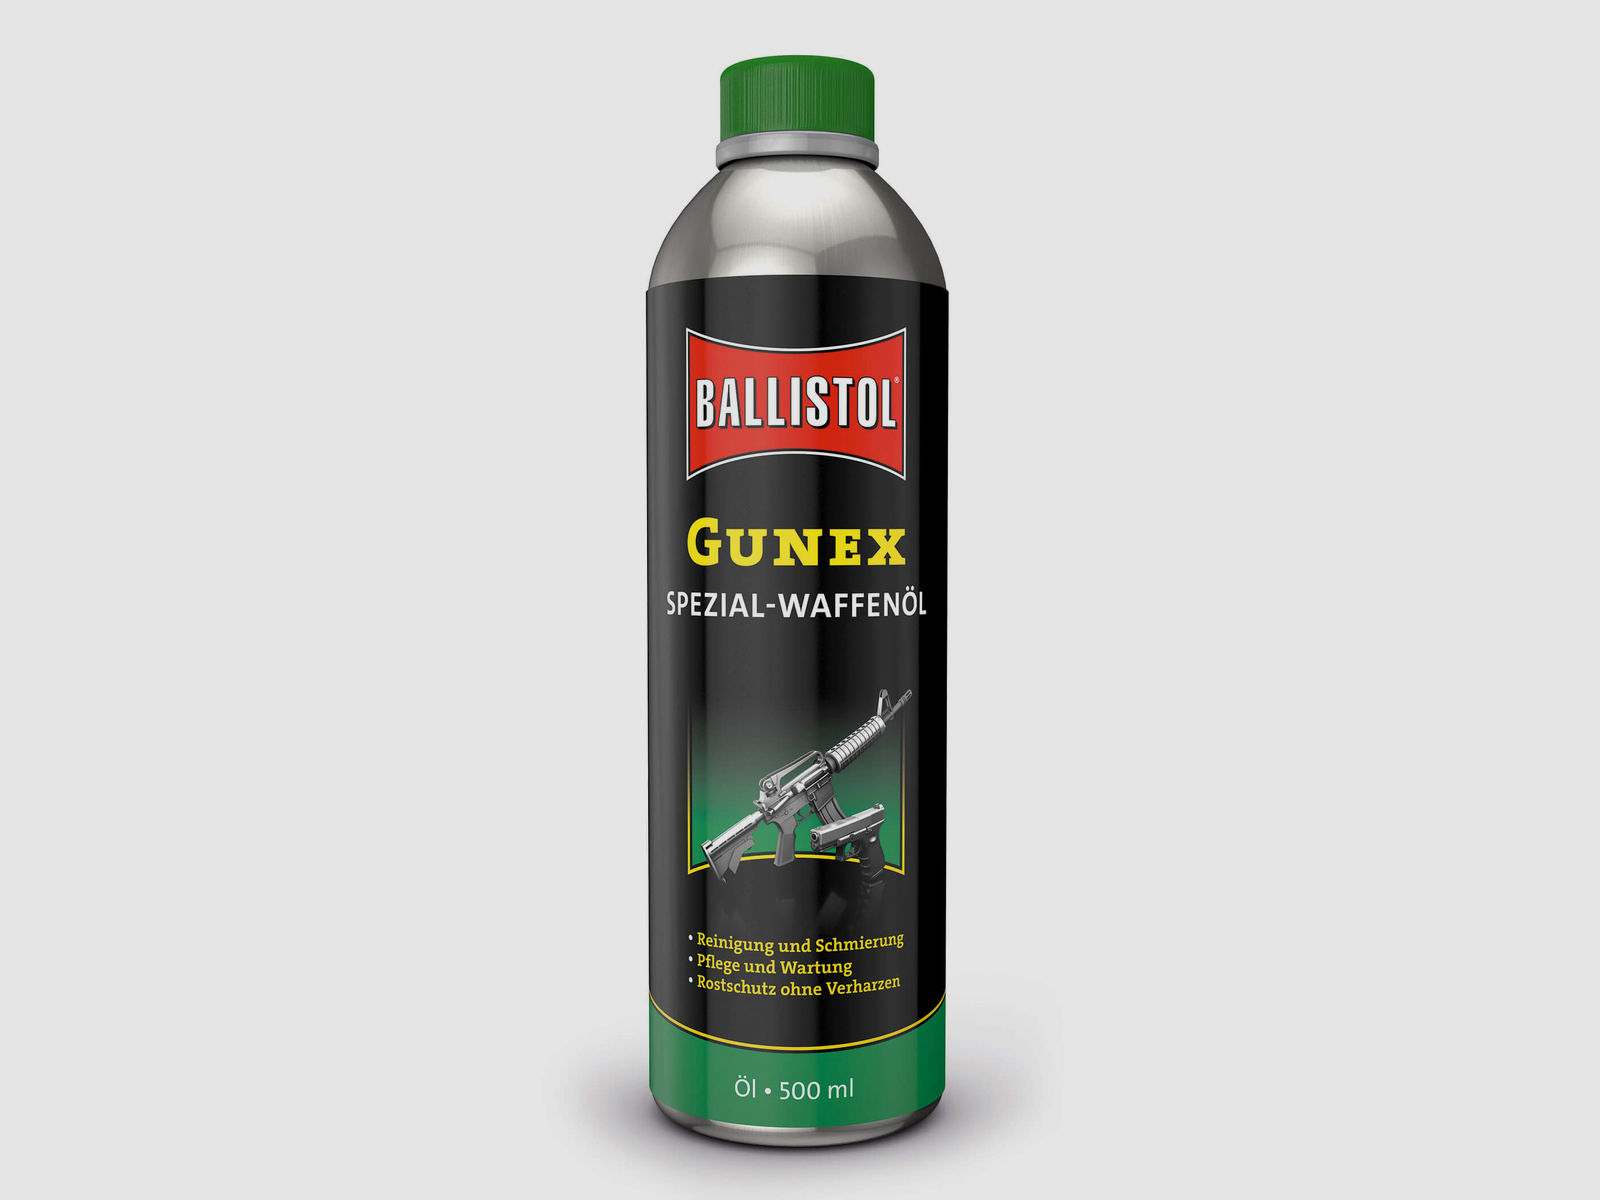 Ballistol Gunex Spezial-Waffenöl - 500ml Flasch